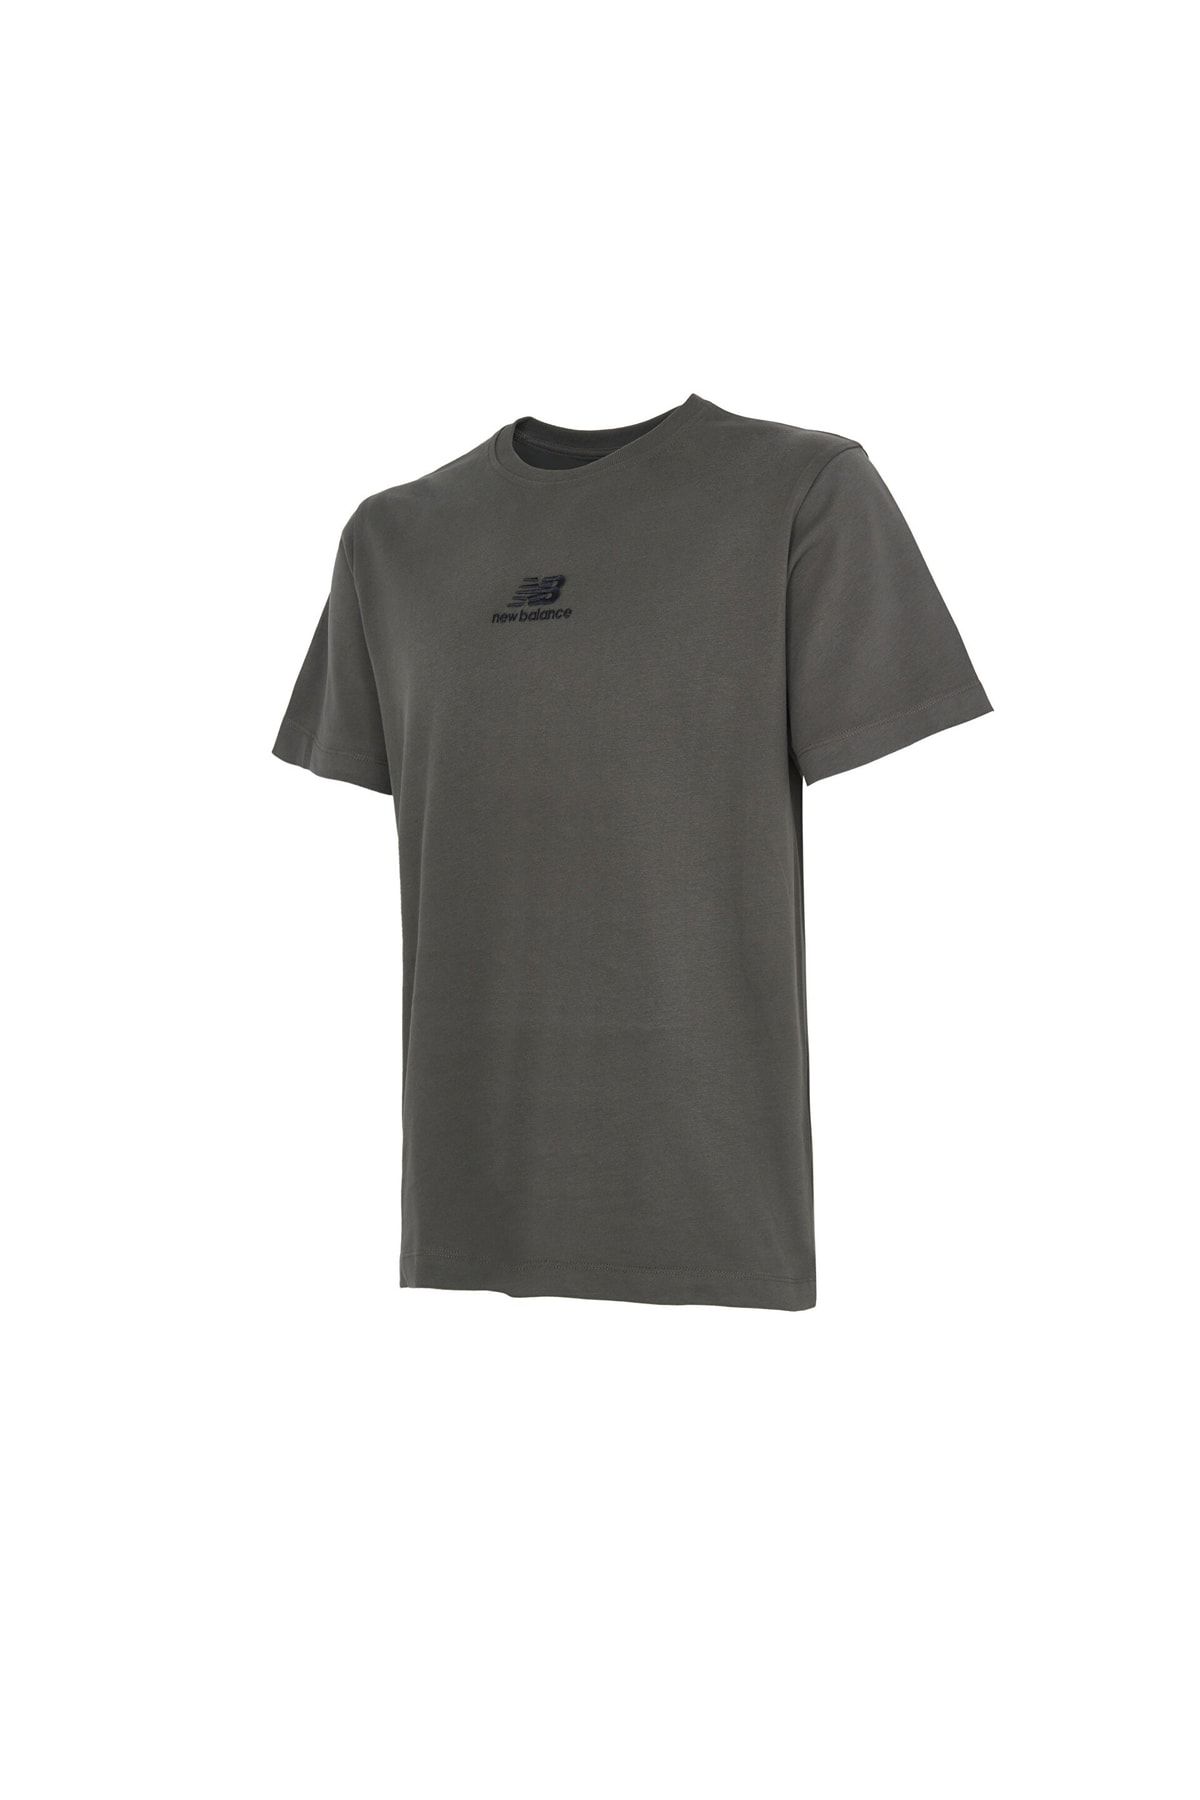 New Balance Nb Man Lifestyle T-shirt Erkek Yeşil Tshirt Mnt1348-tpg